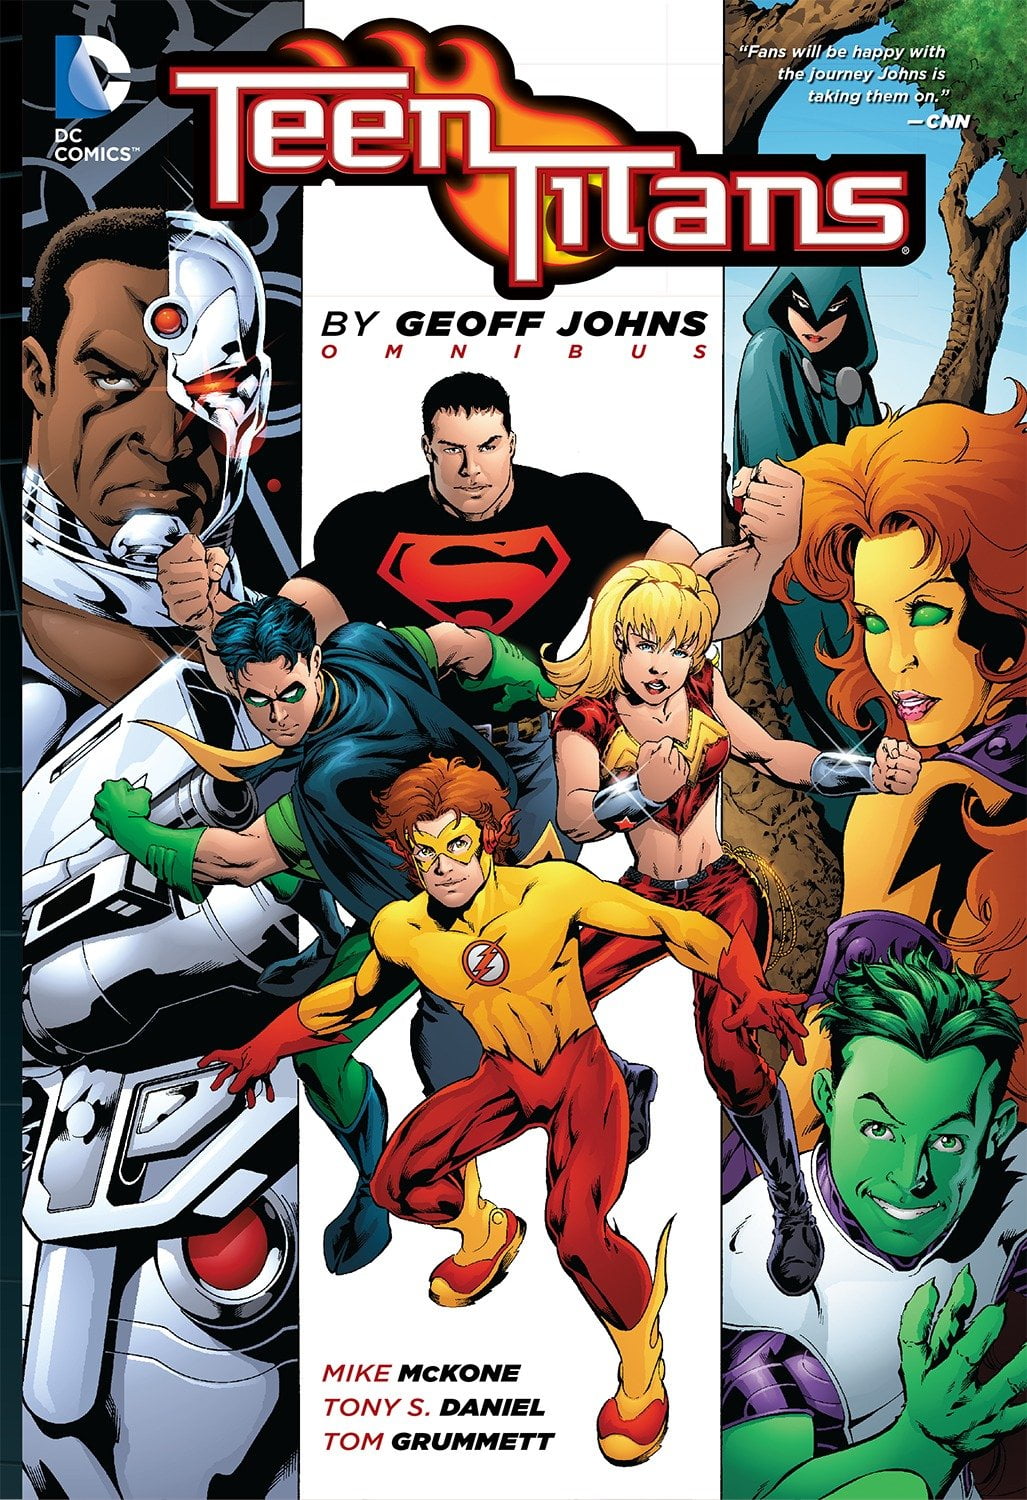 Teen Titans, Vol. 4 by Geoff Johns